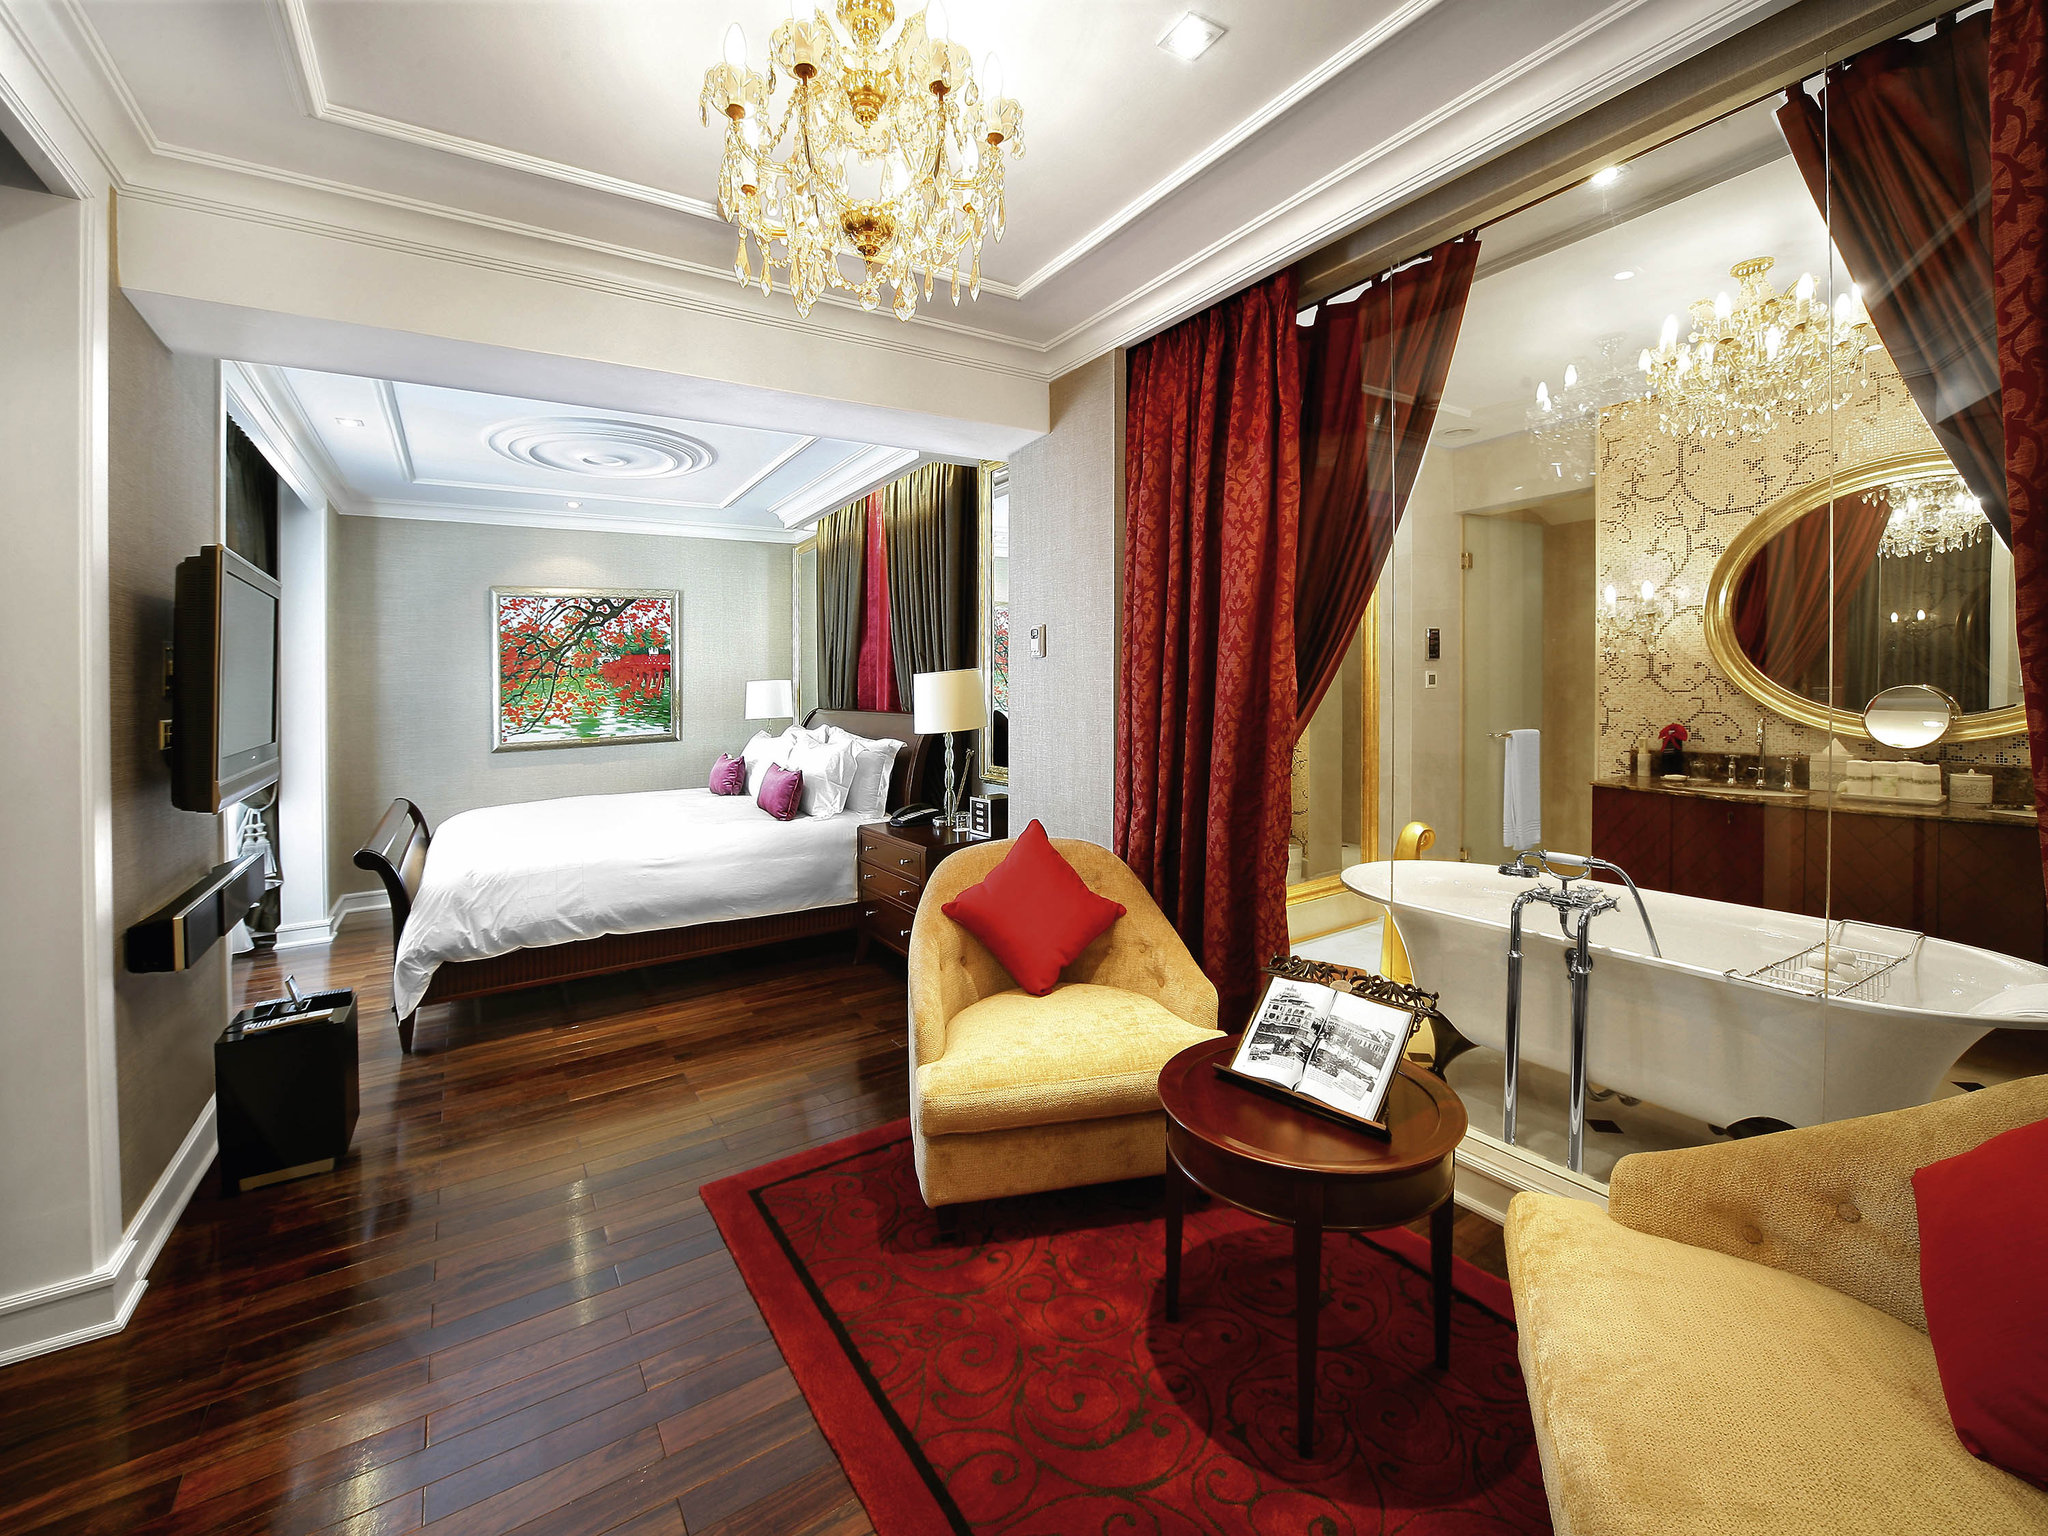 Honeymoon holiday destination hotel Sofitel Legend Metropole, Hanoi Vietnam